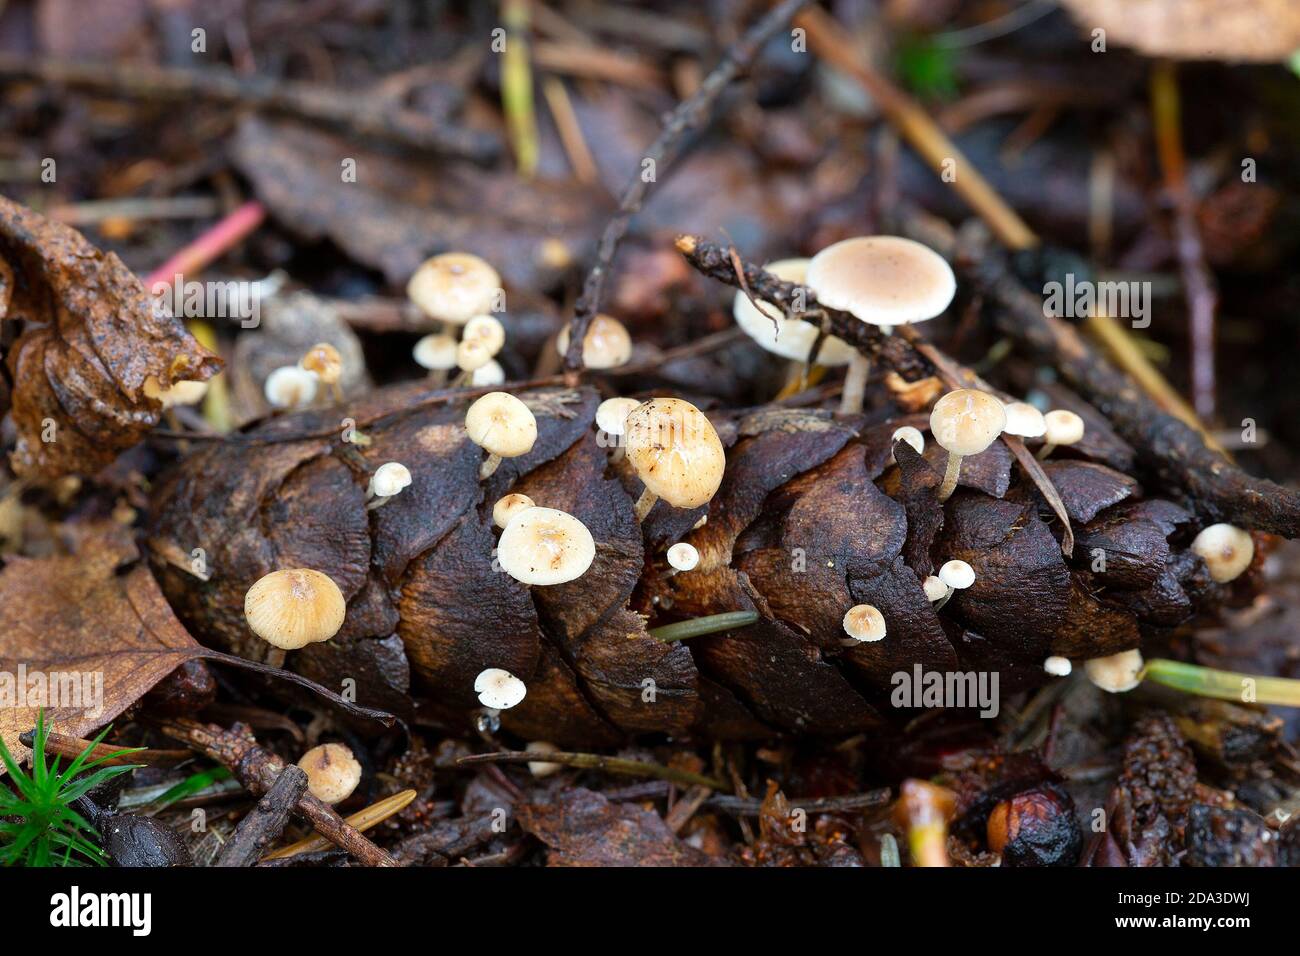 Mushrooms Strobilurus sp. growing on spruce cone Stock Photo